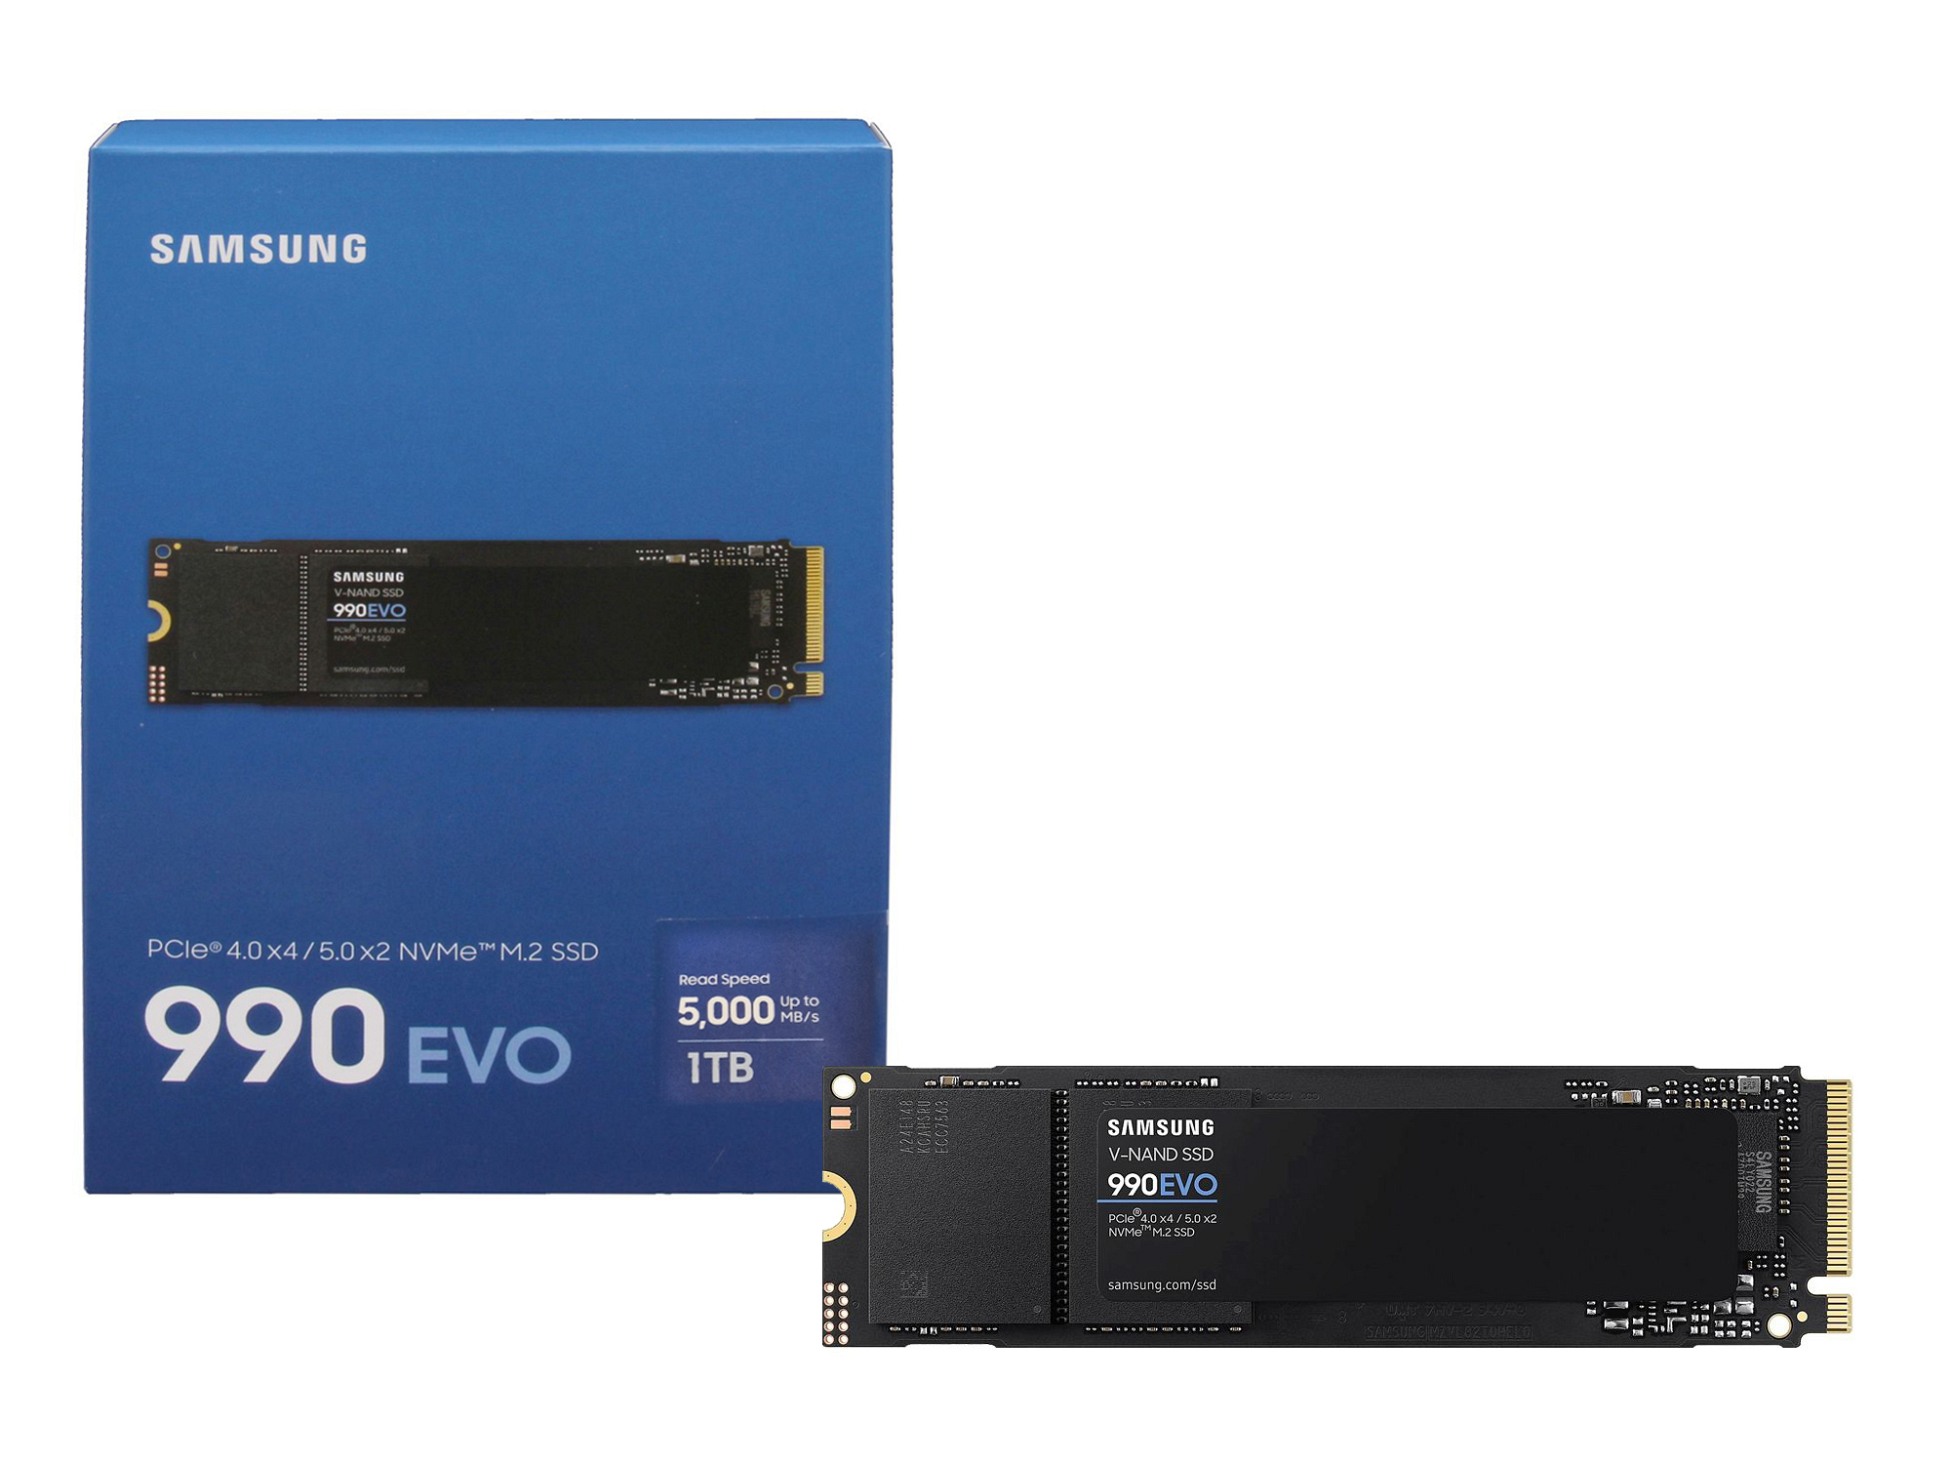 Samsung LA69-02233A Samsung 990 EVO SSD Festplatte 1TB (M.2 22 x 80 mm)